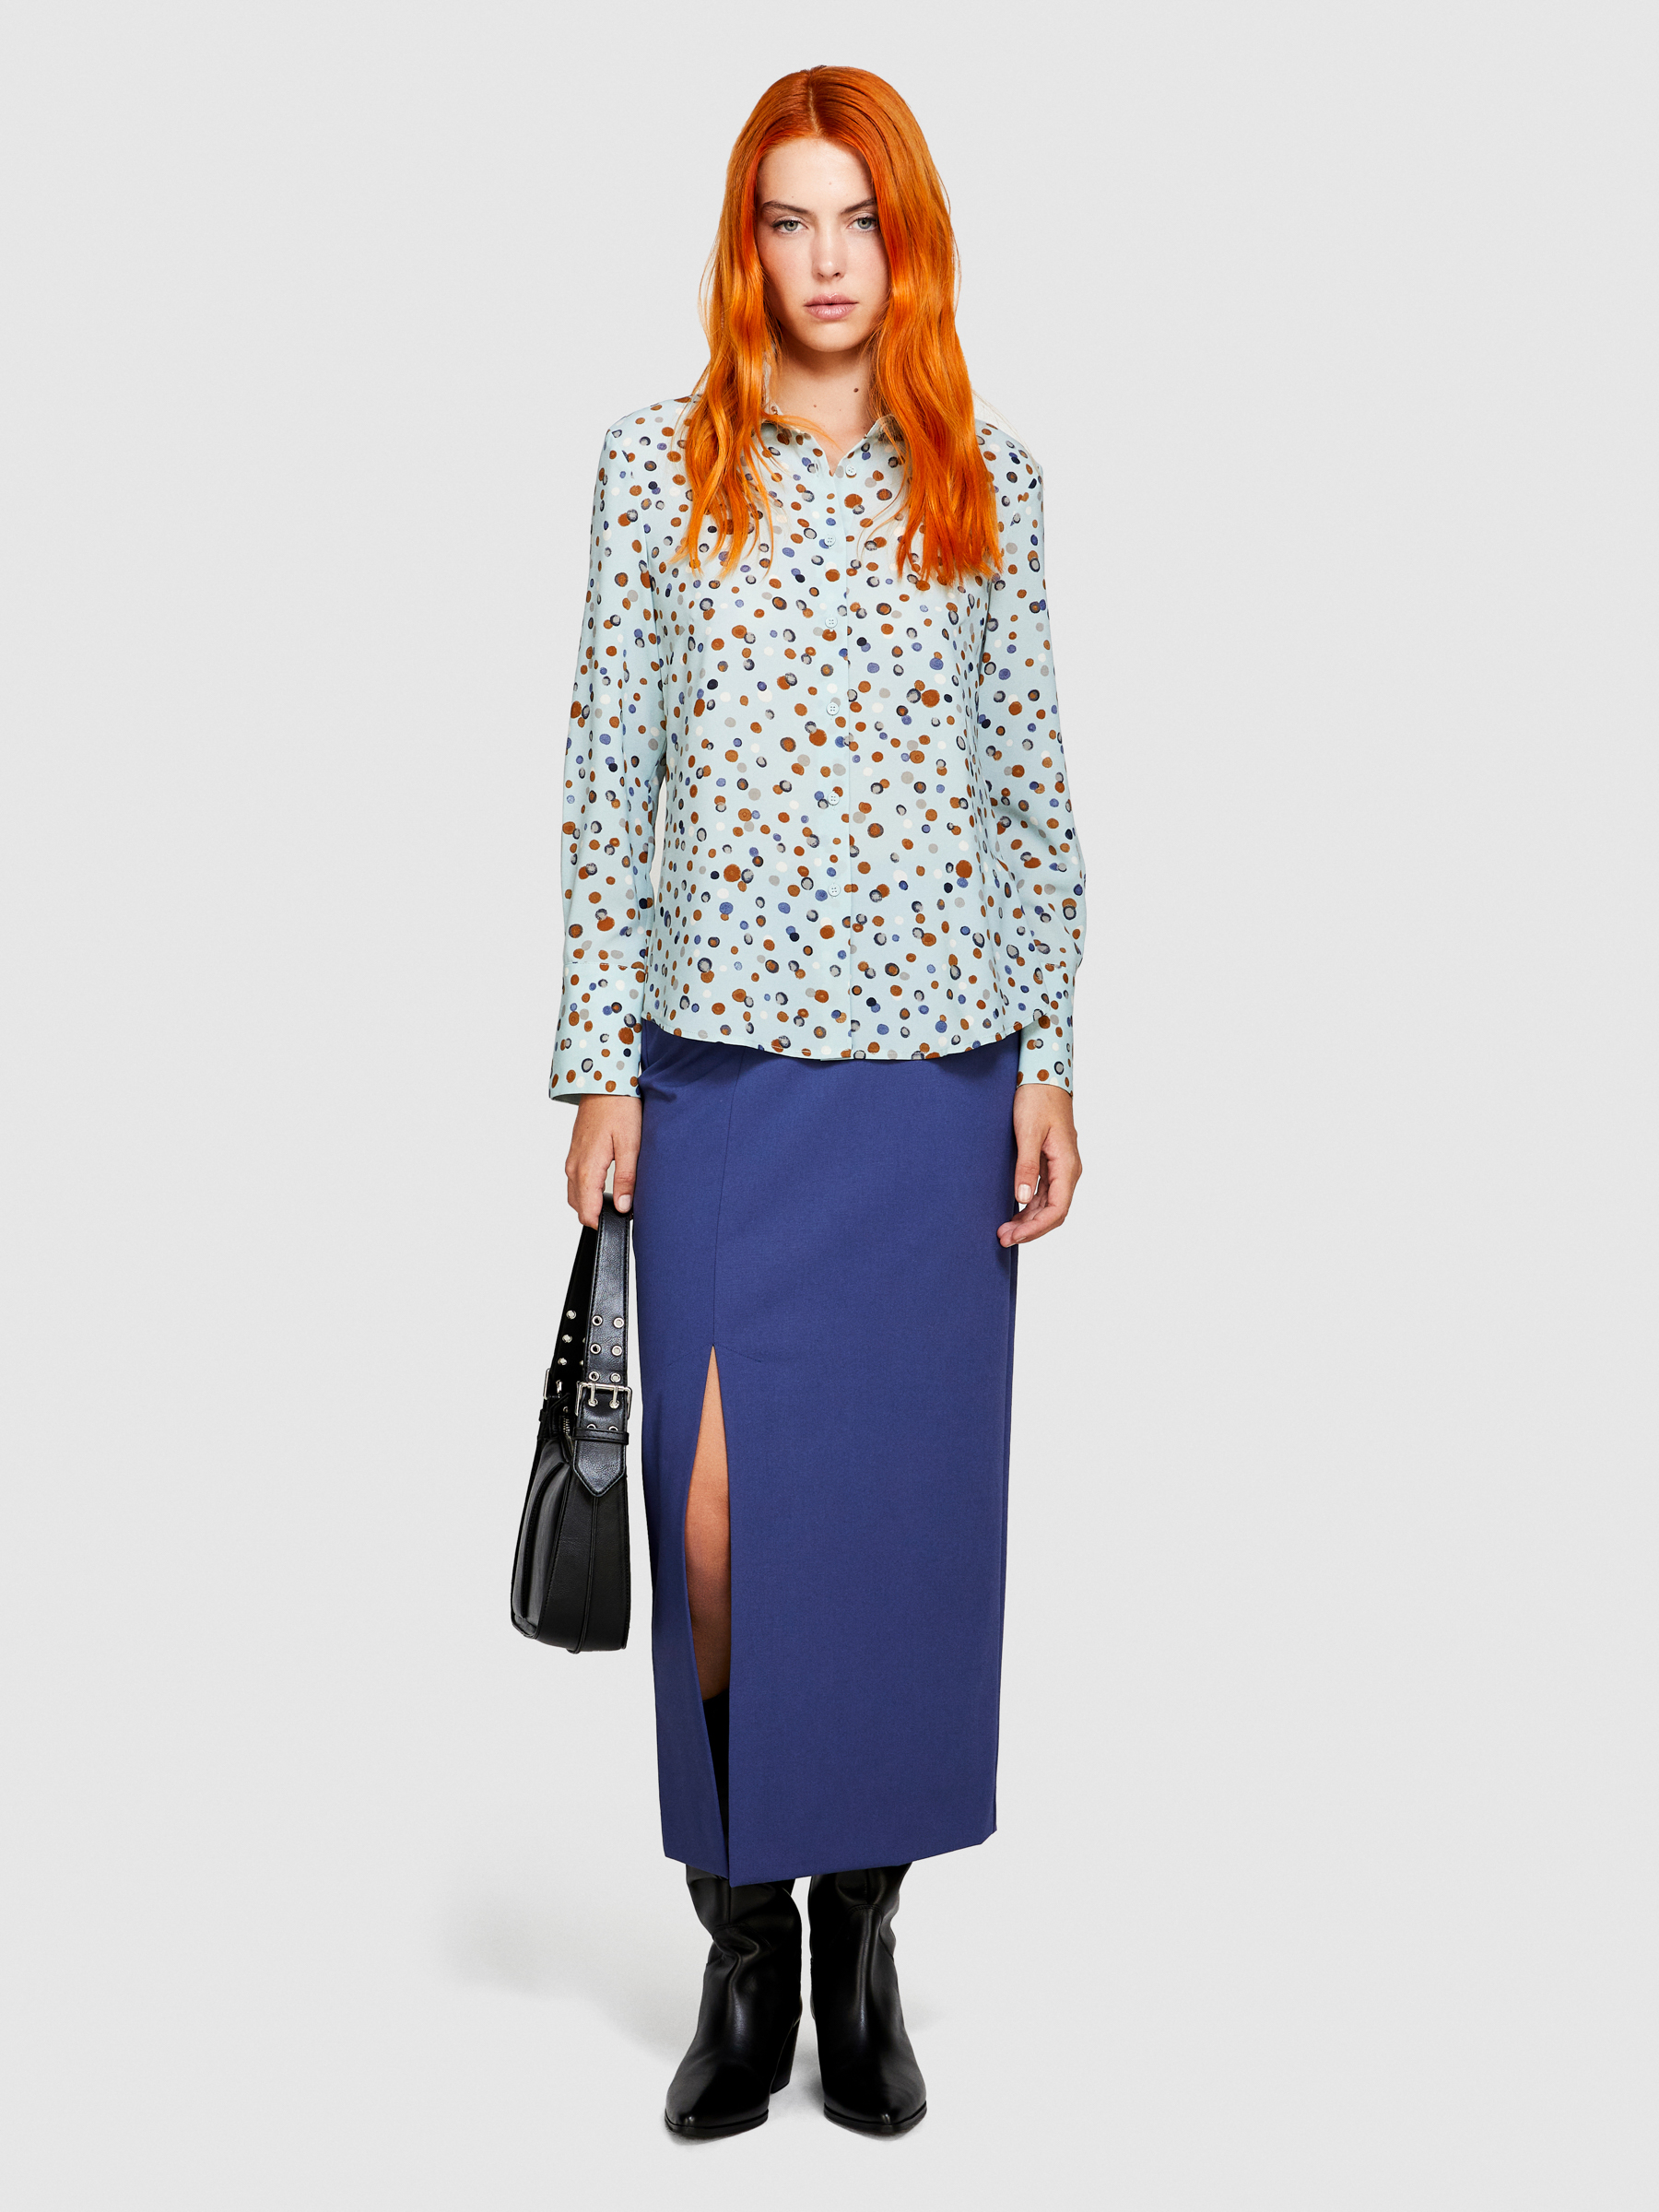 Sisley - Printed Shirt, Woman, Multi-color, Size: L